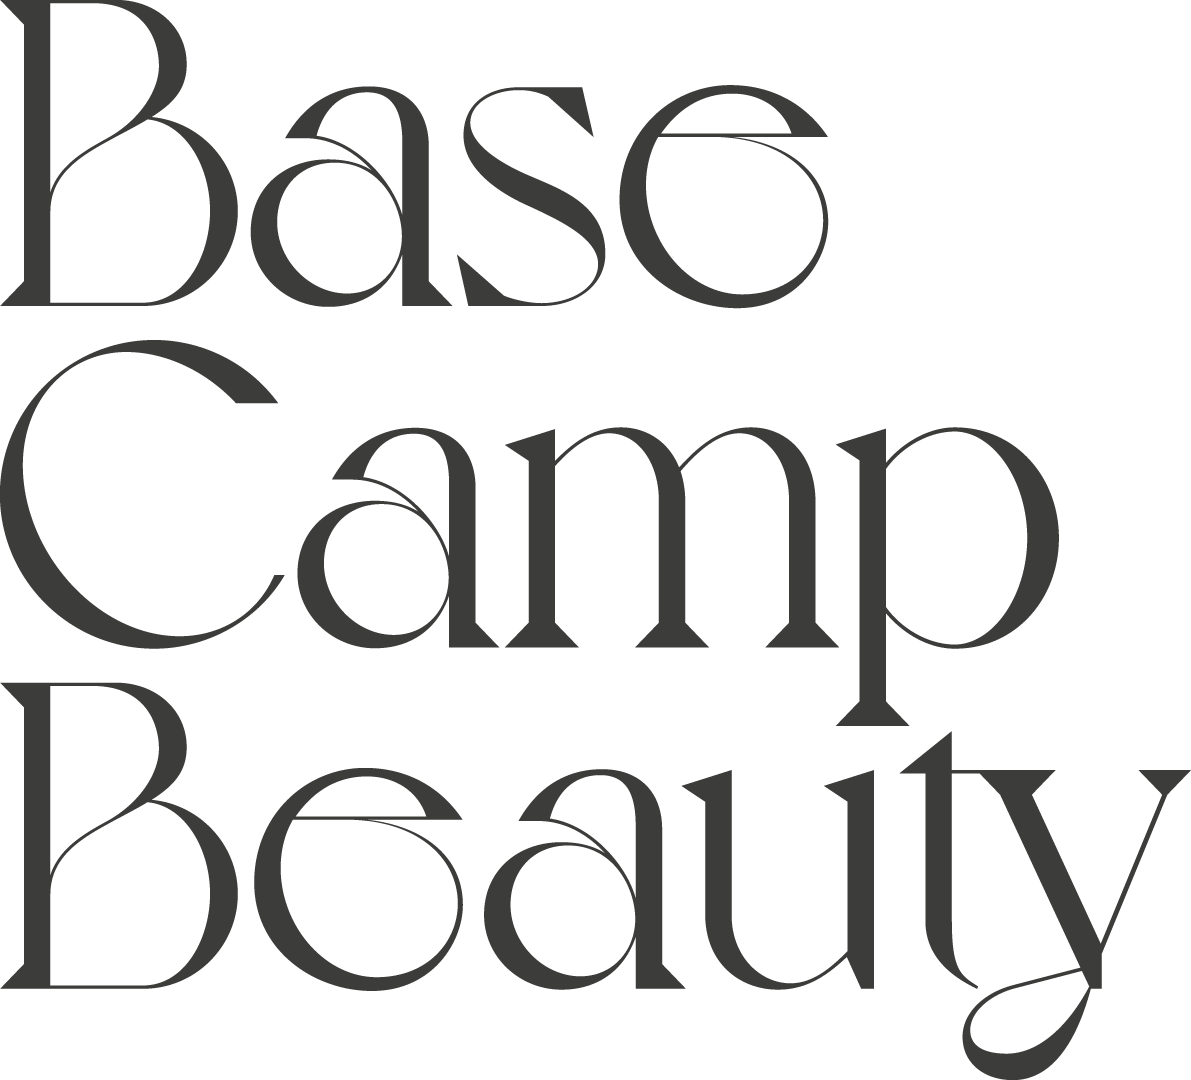 Base Camp Beauty